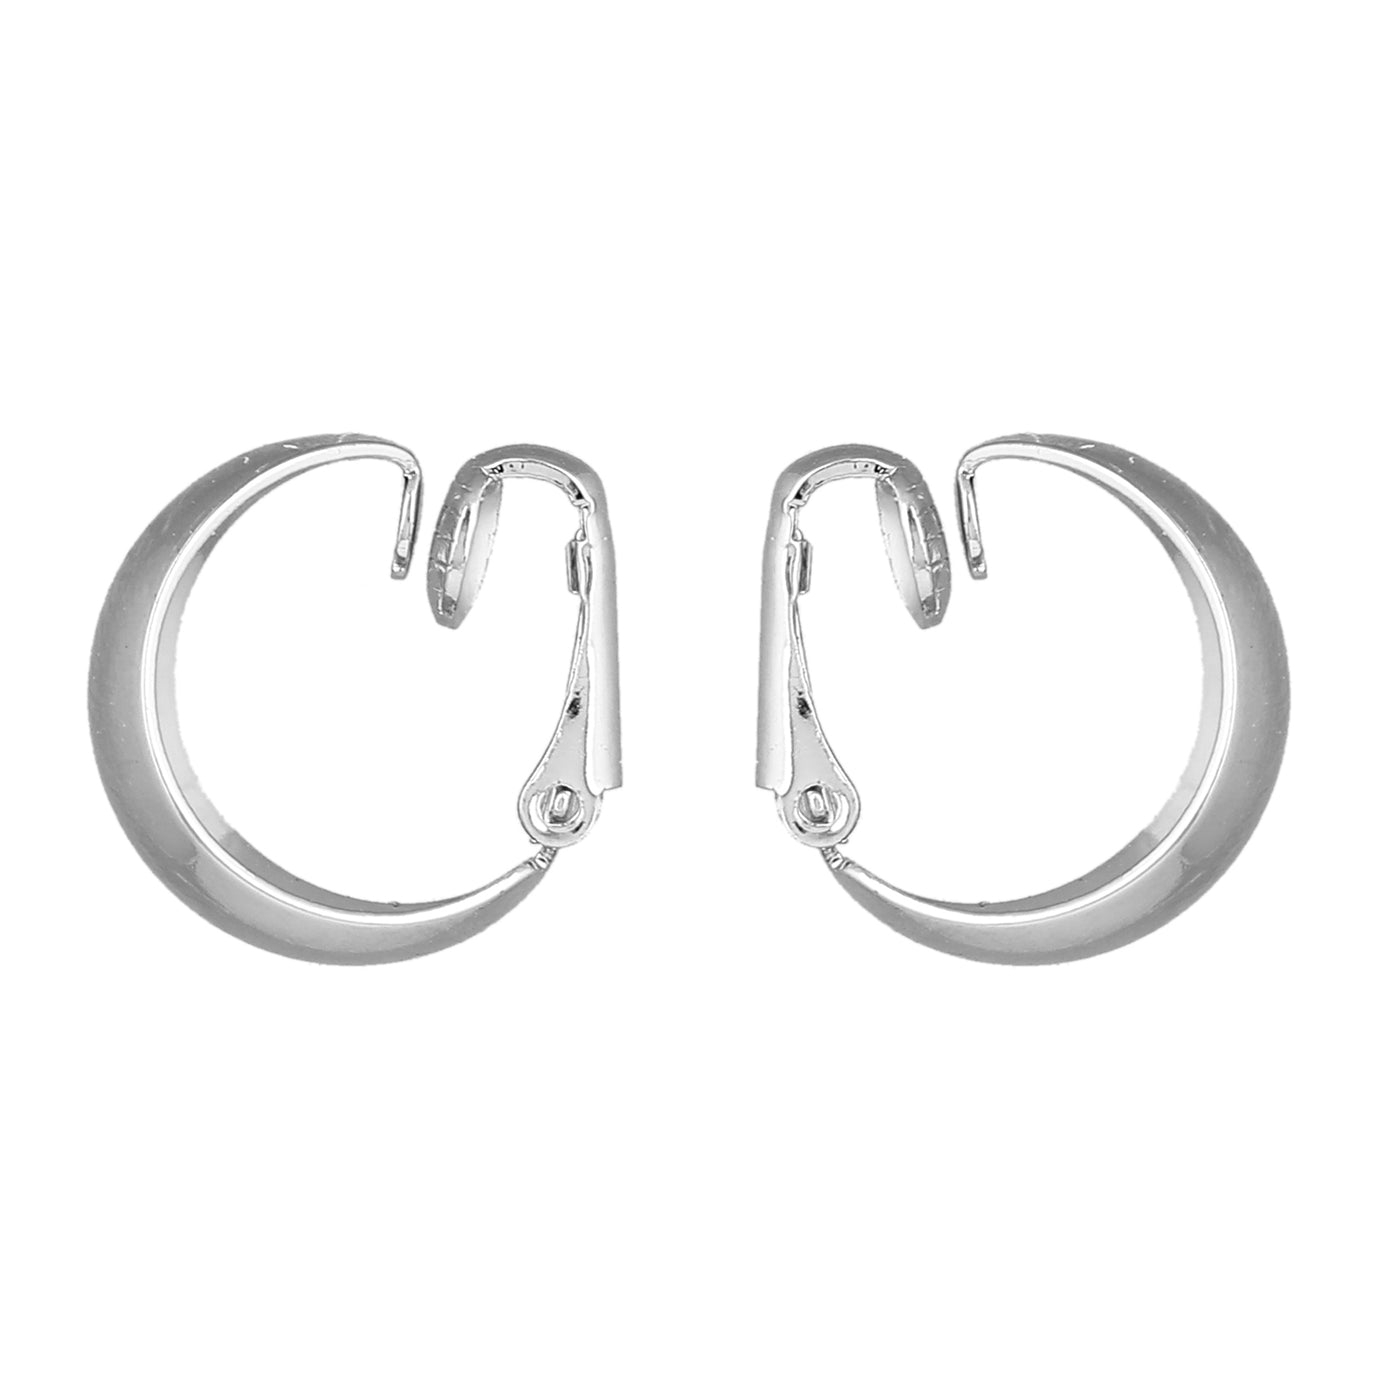 Estele Fashion Earrings for Women and Girls Rhodium Plated Latest Stylish Medium Size Metallic Hoop Earrings Versatile Chic for Women & Girls